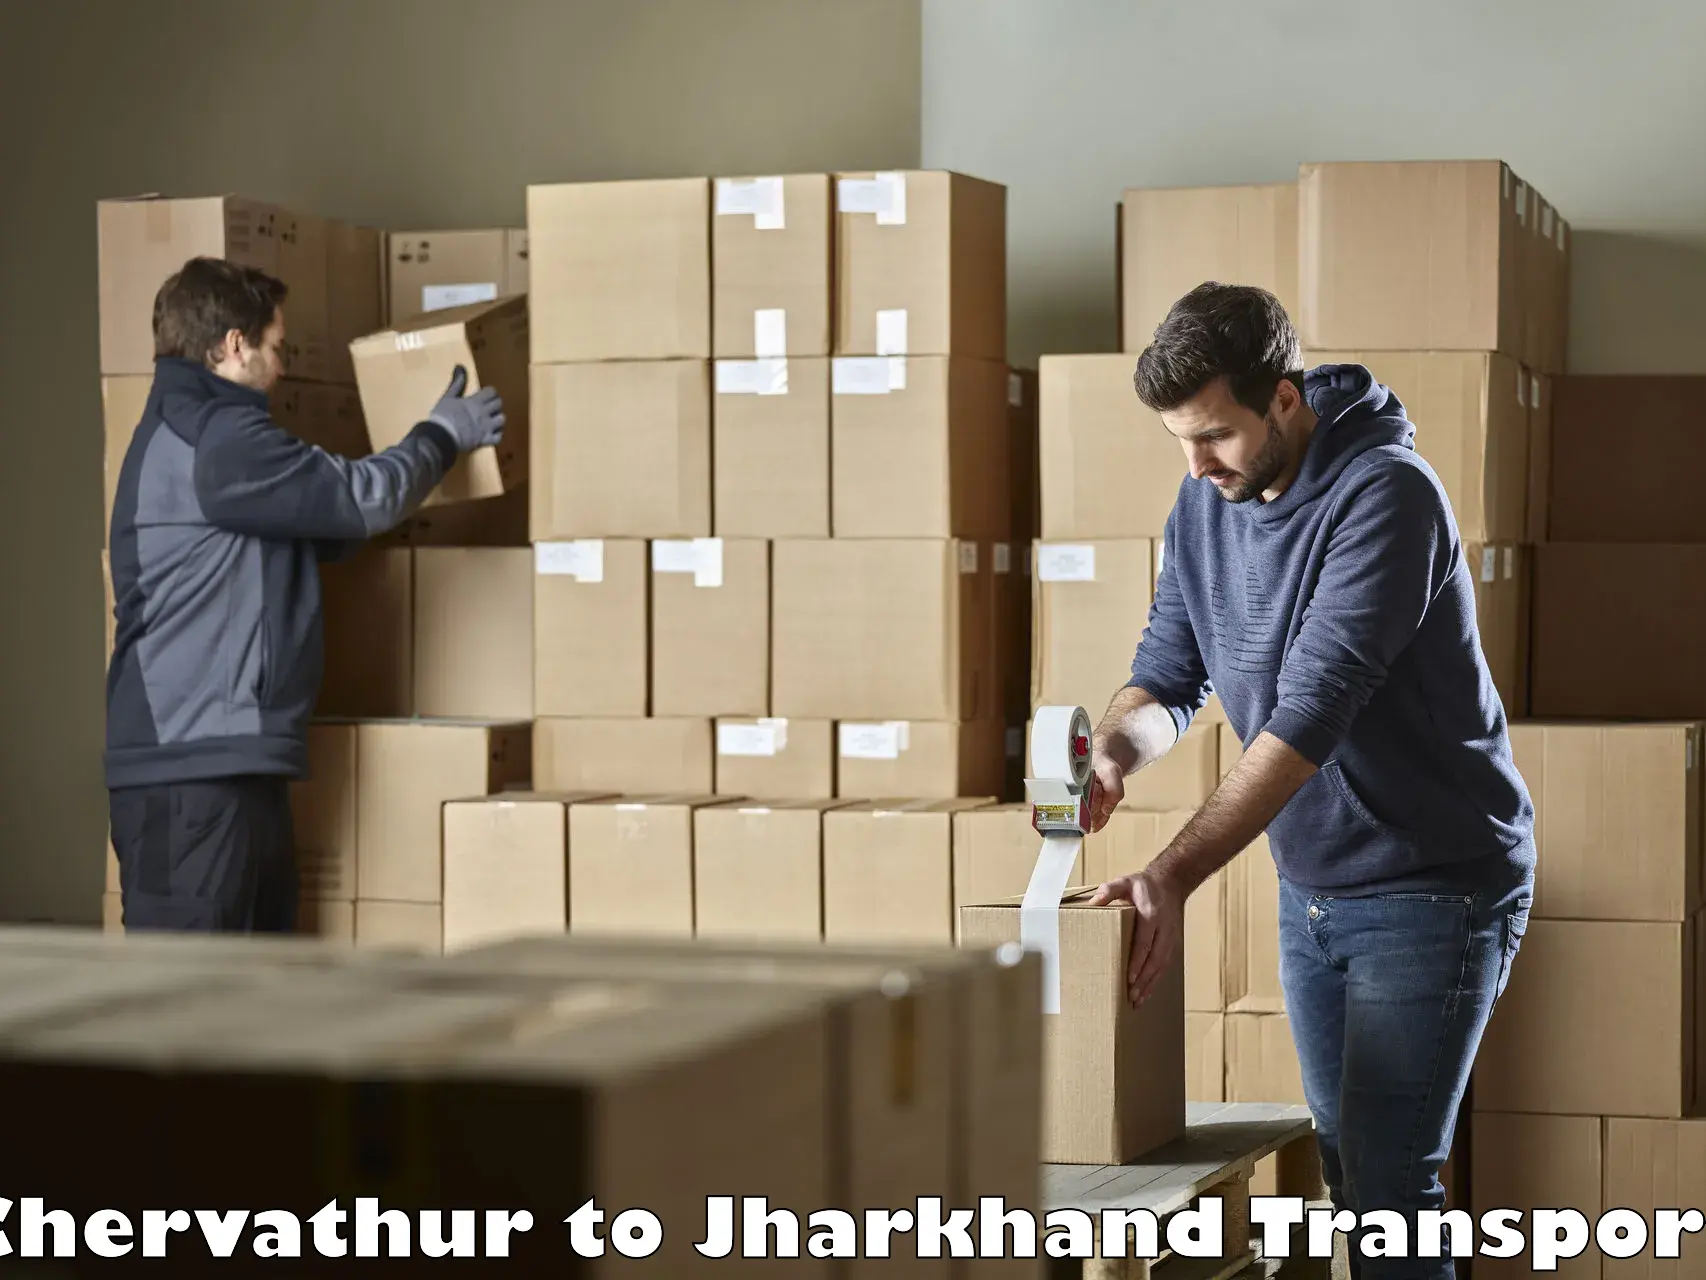 Daily transport service Chervathur to Jharkhand